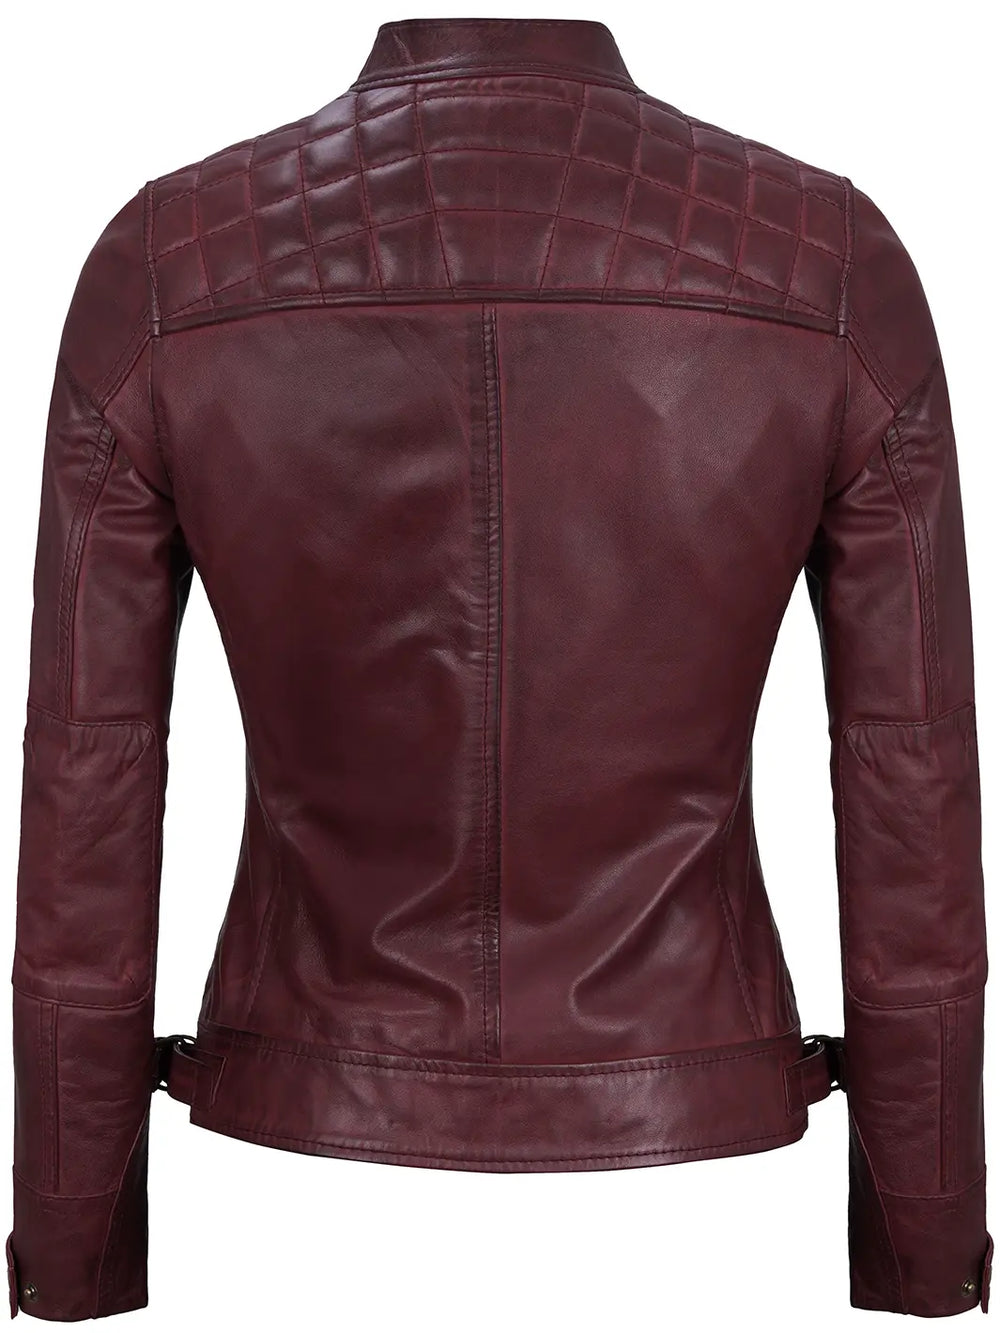 Cafe racer real leather jacket